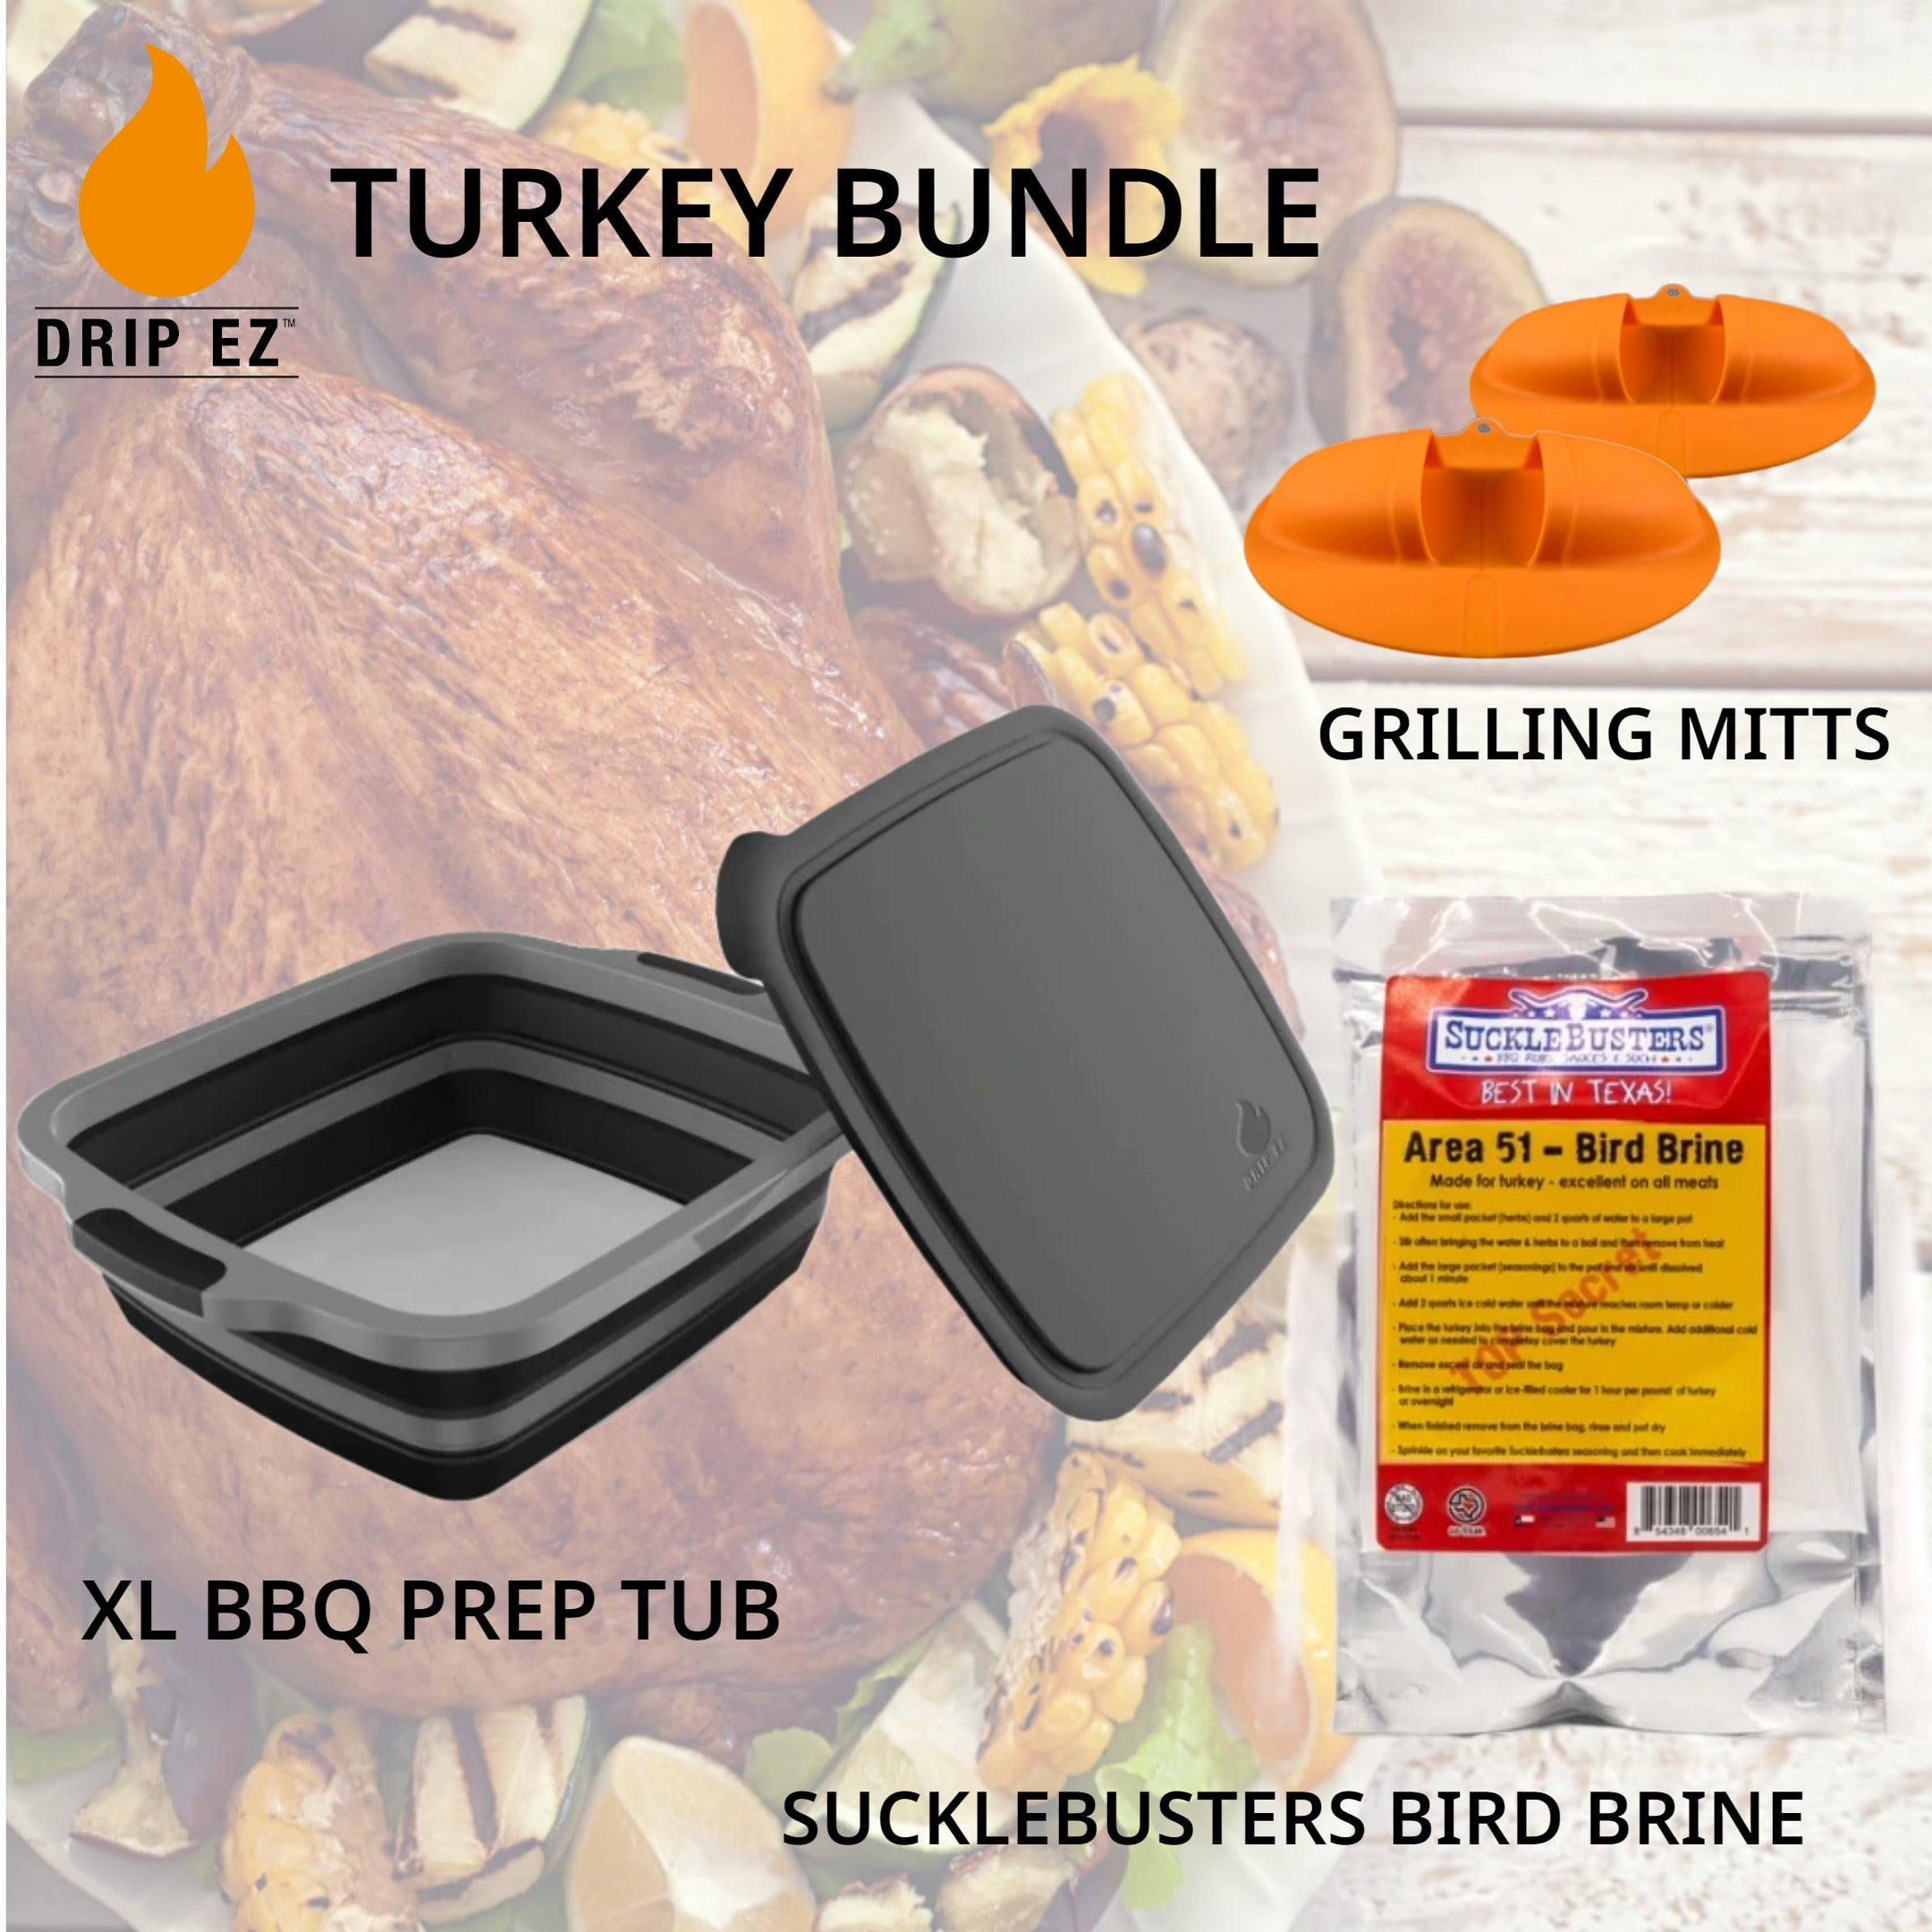 Turkey Bundle Gift Pack